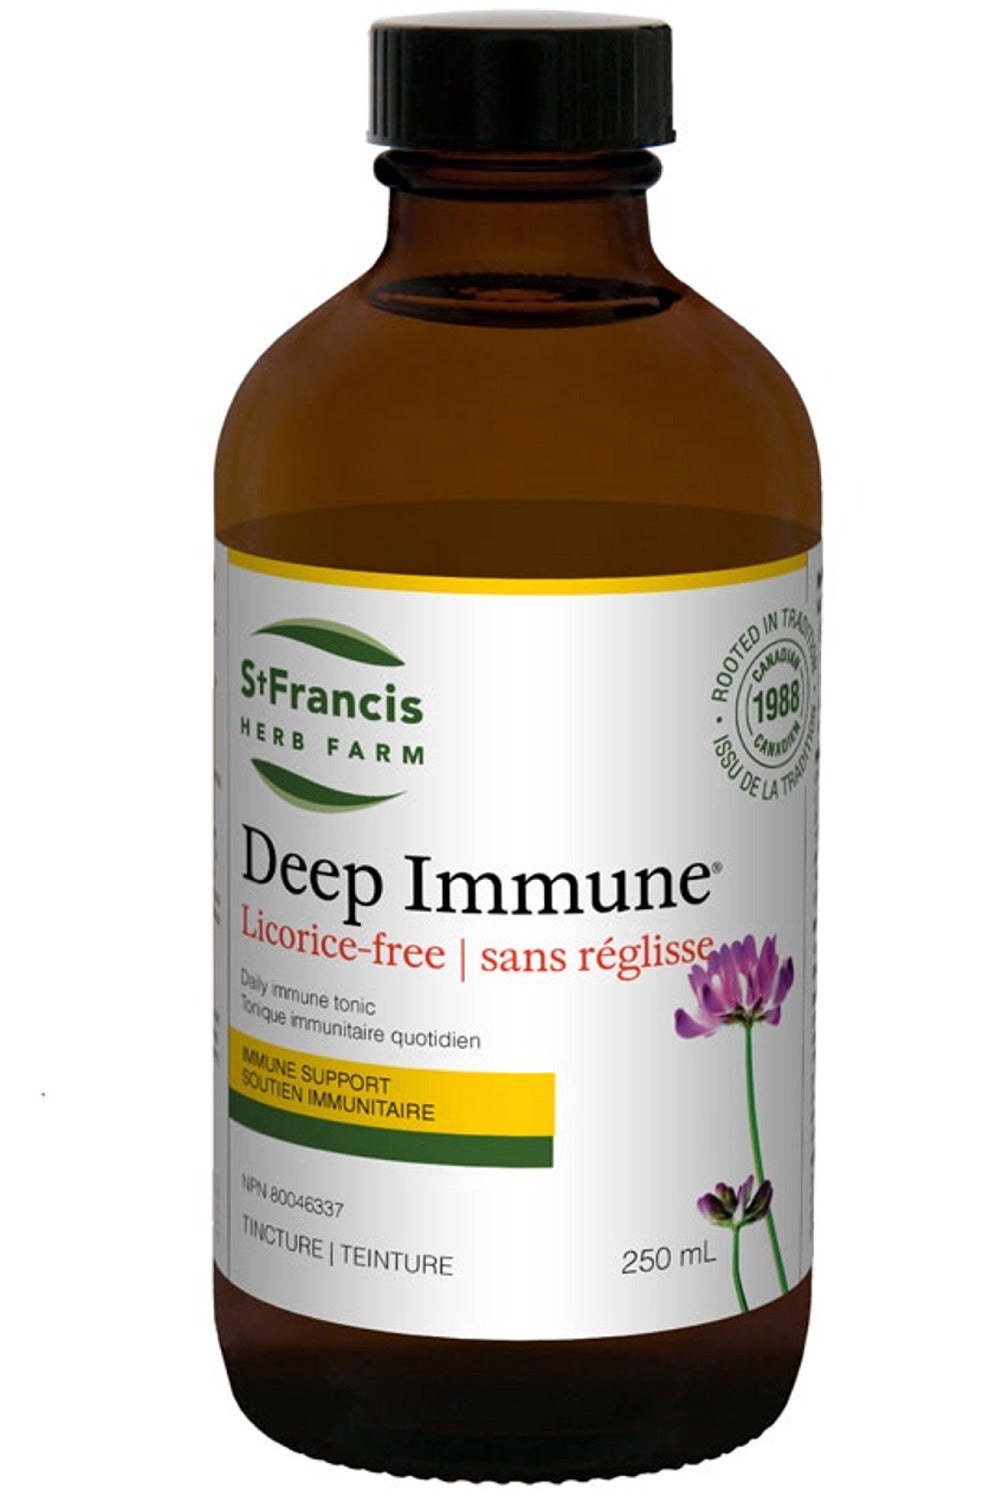 ST FRANCIS HERB FARM Deep Immune Original - Licorice Free (250 ml)